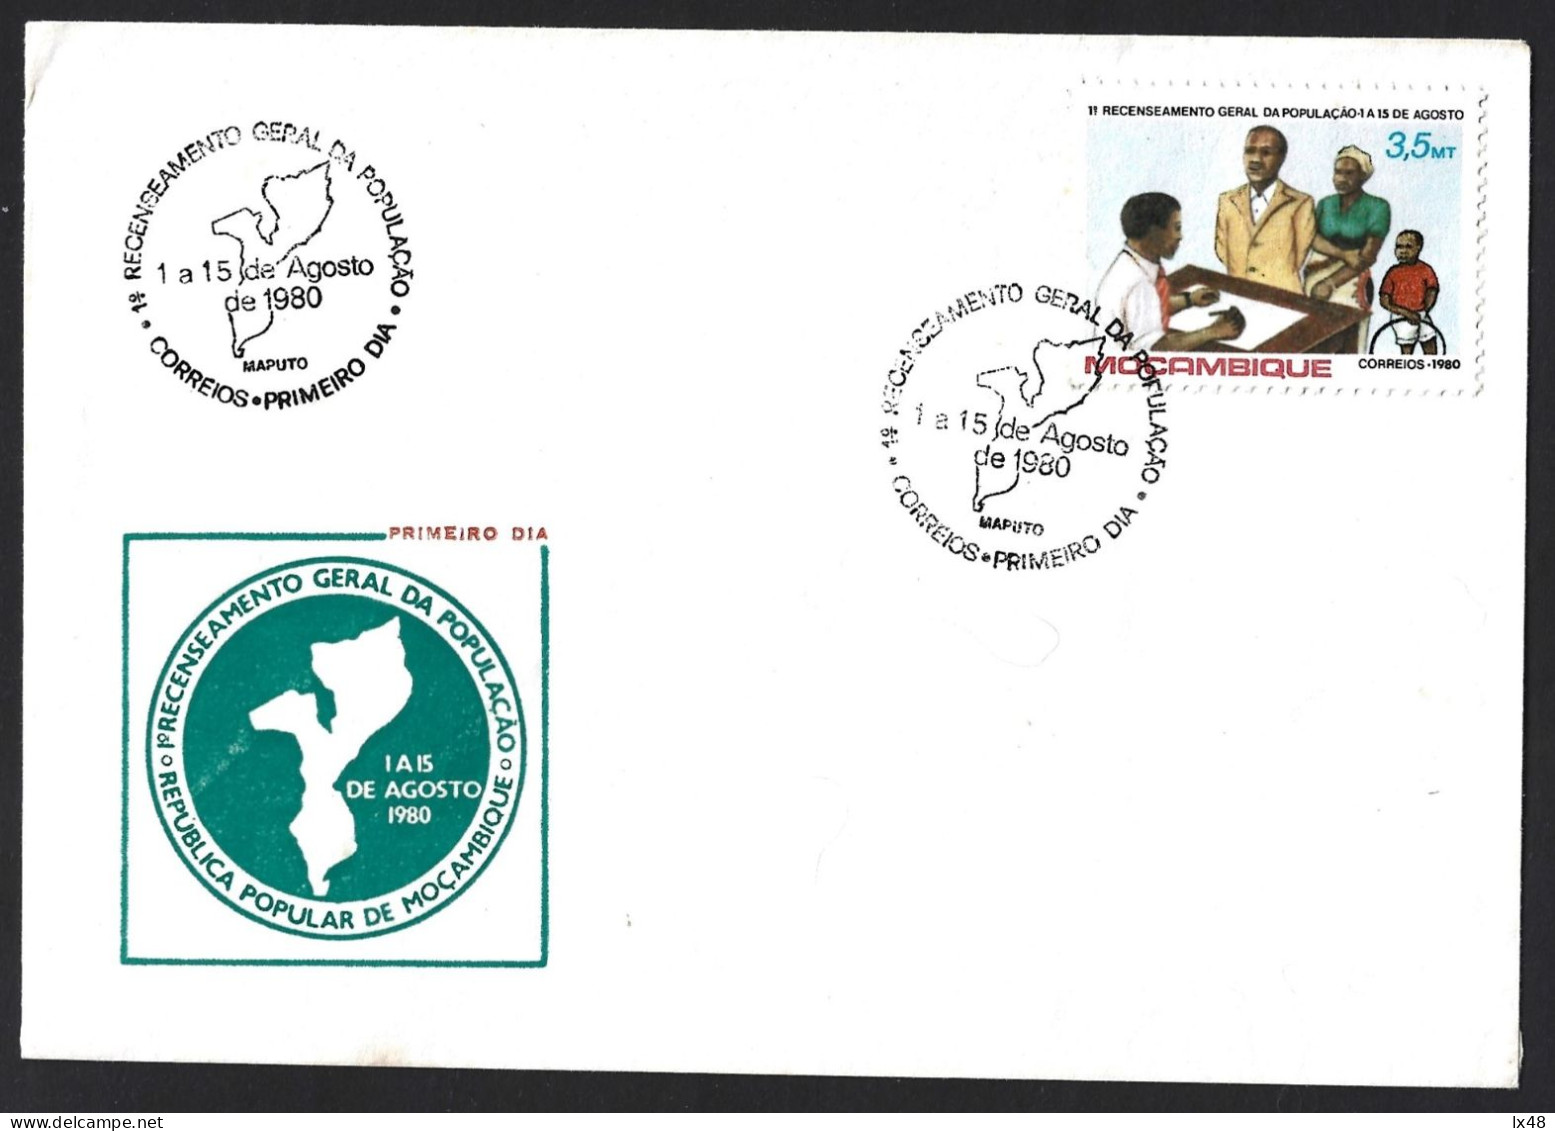 Selo 1º Recenceamento Eleitoral Moçambique 1980. Mapa Estilizado. Família. Stamp 1st Electoral Registration Moçambique - Mozambique